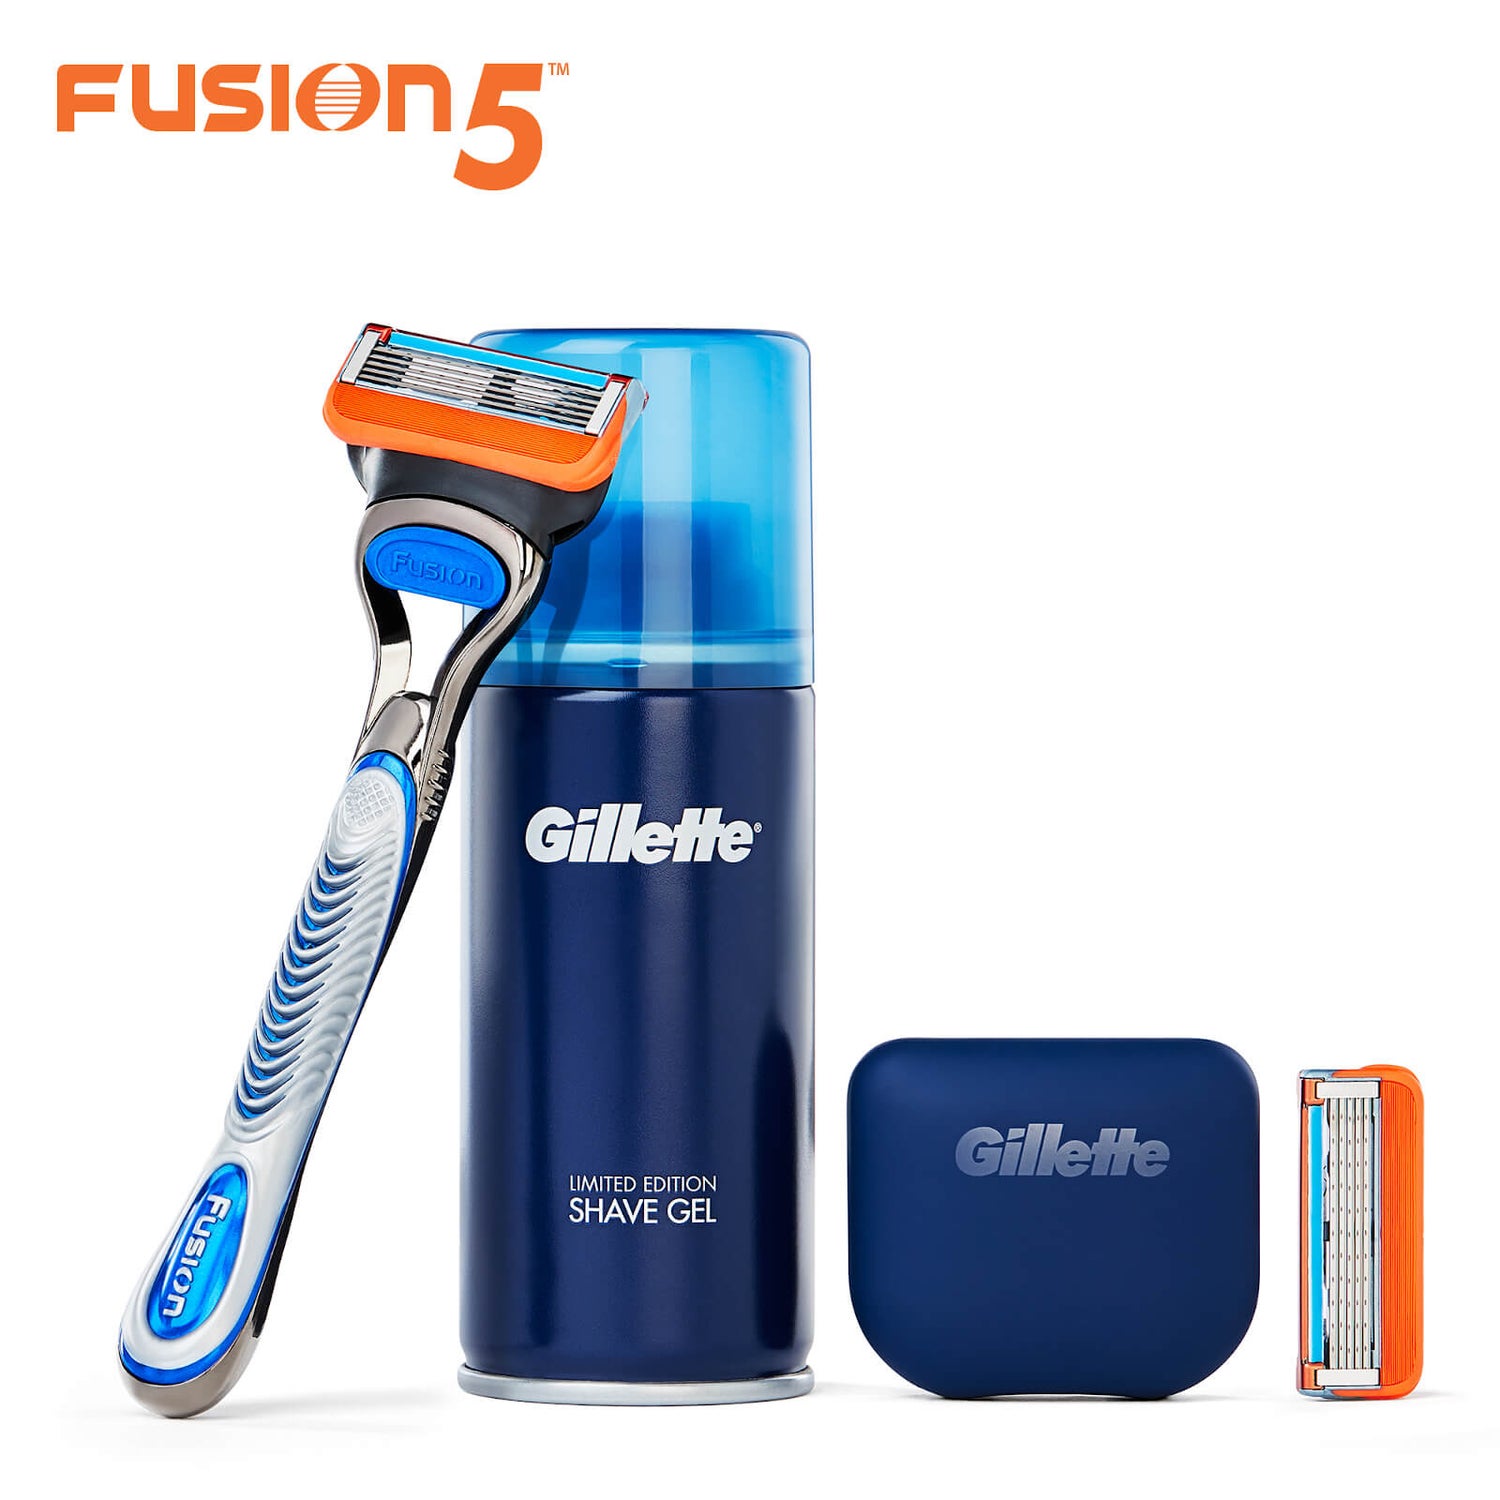 Gillette Fusion5 Starter Kit Subscription - Trial 1